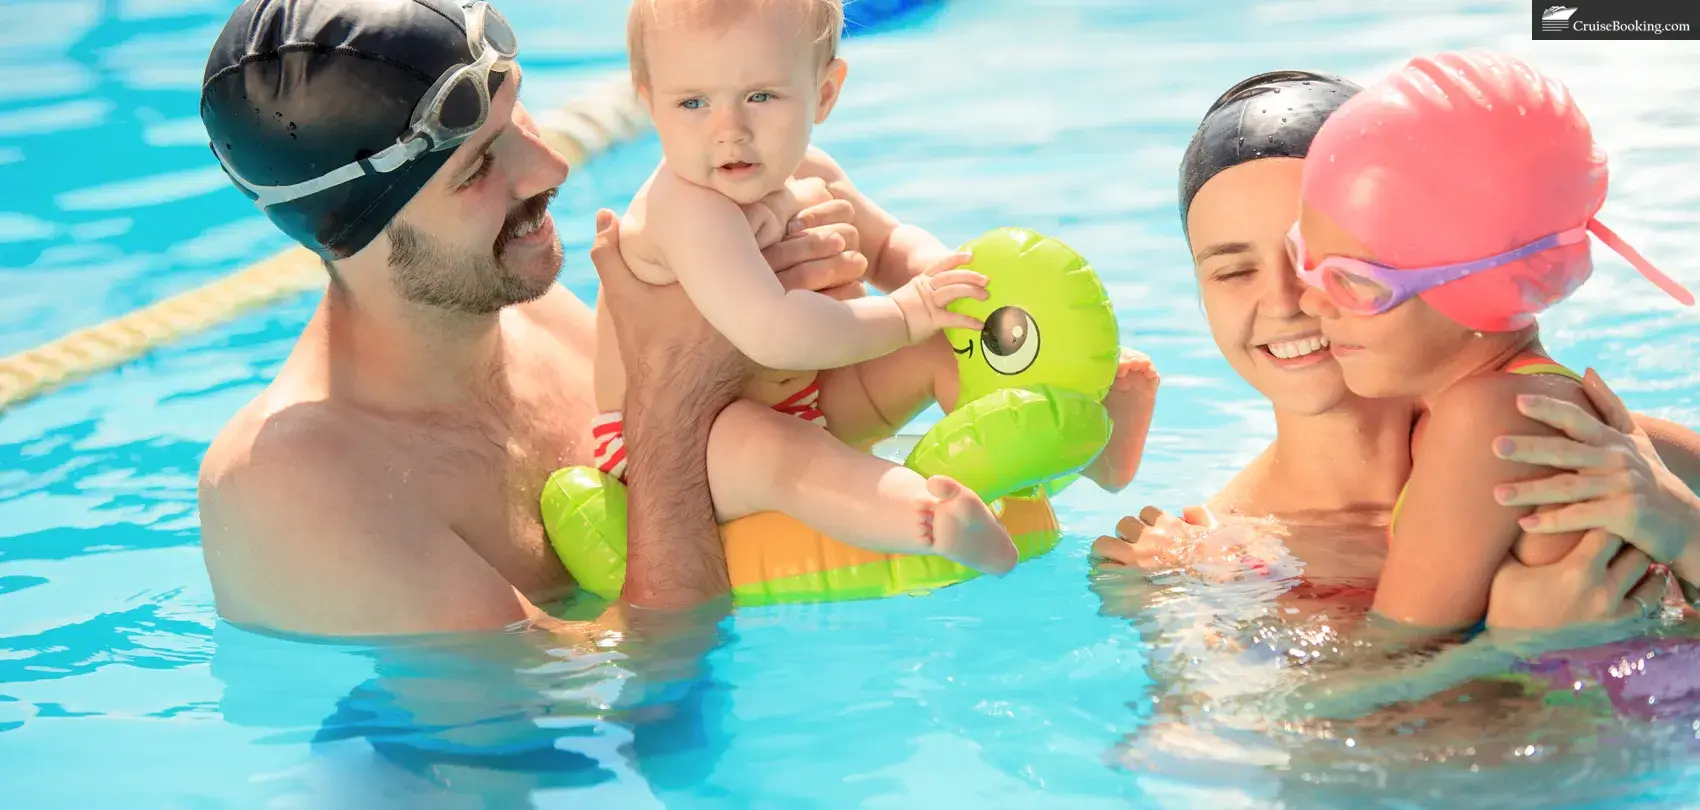 A happy family enjoying a swim in the pool